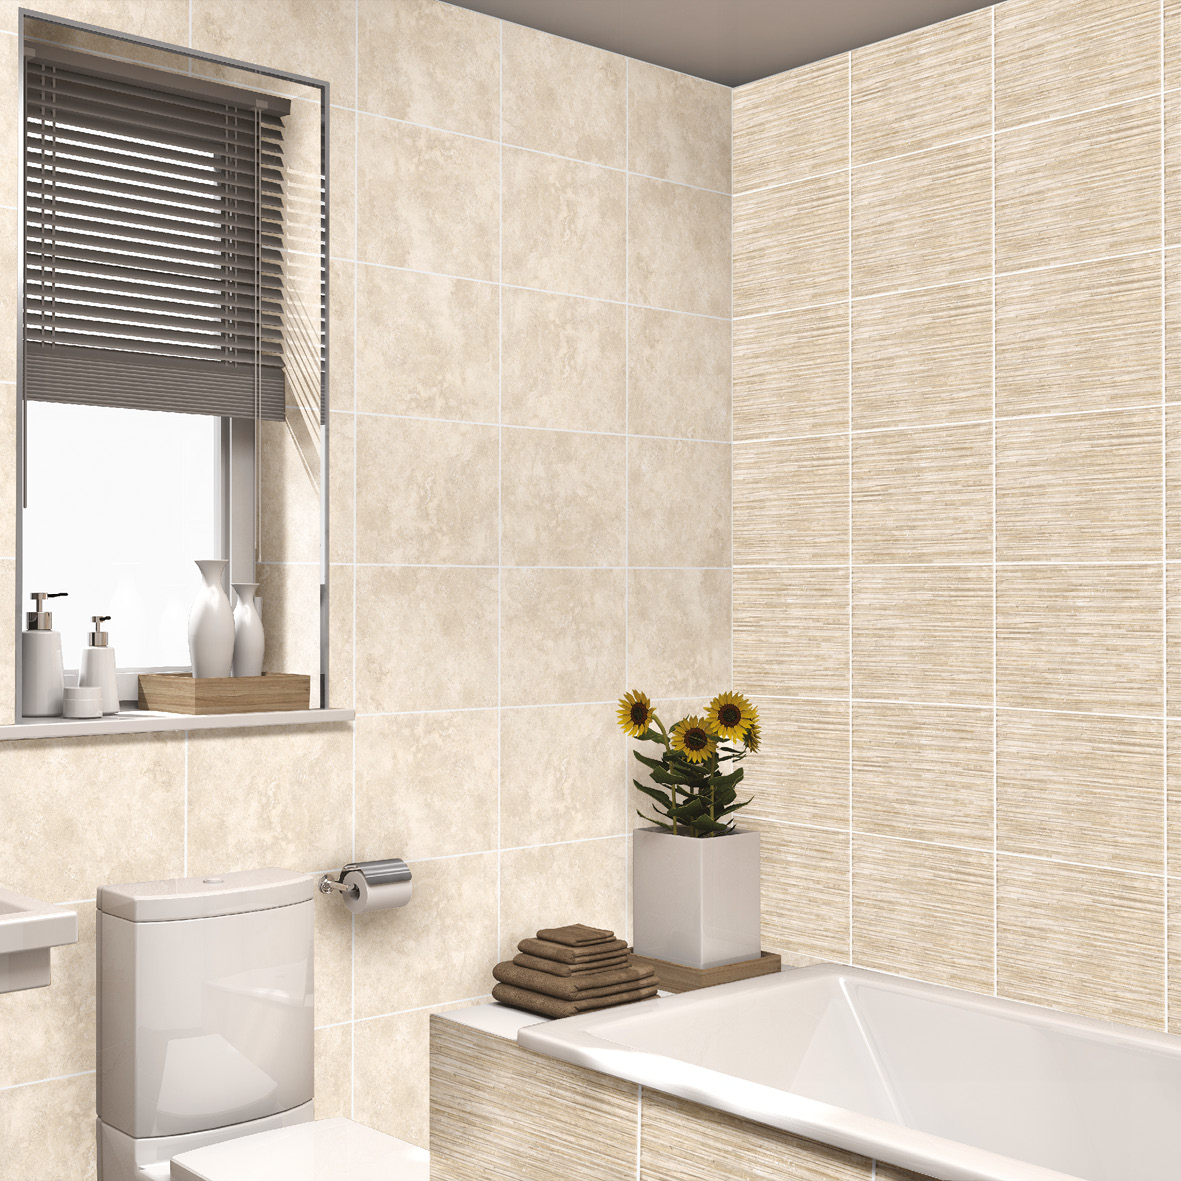 Accona Light rock satin linear tile on a bathroom wall with matching plain tile